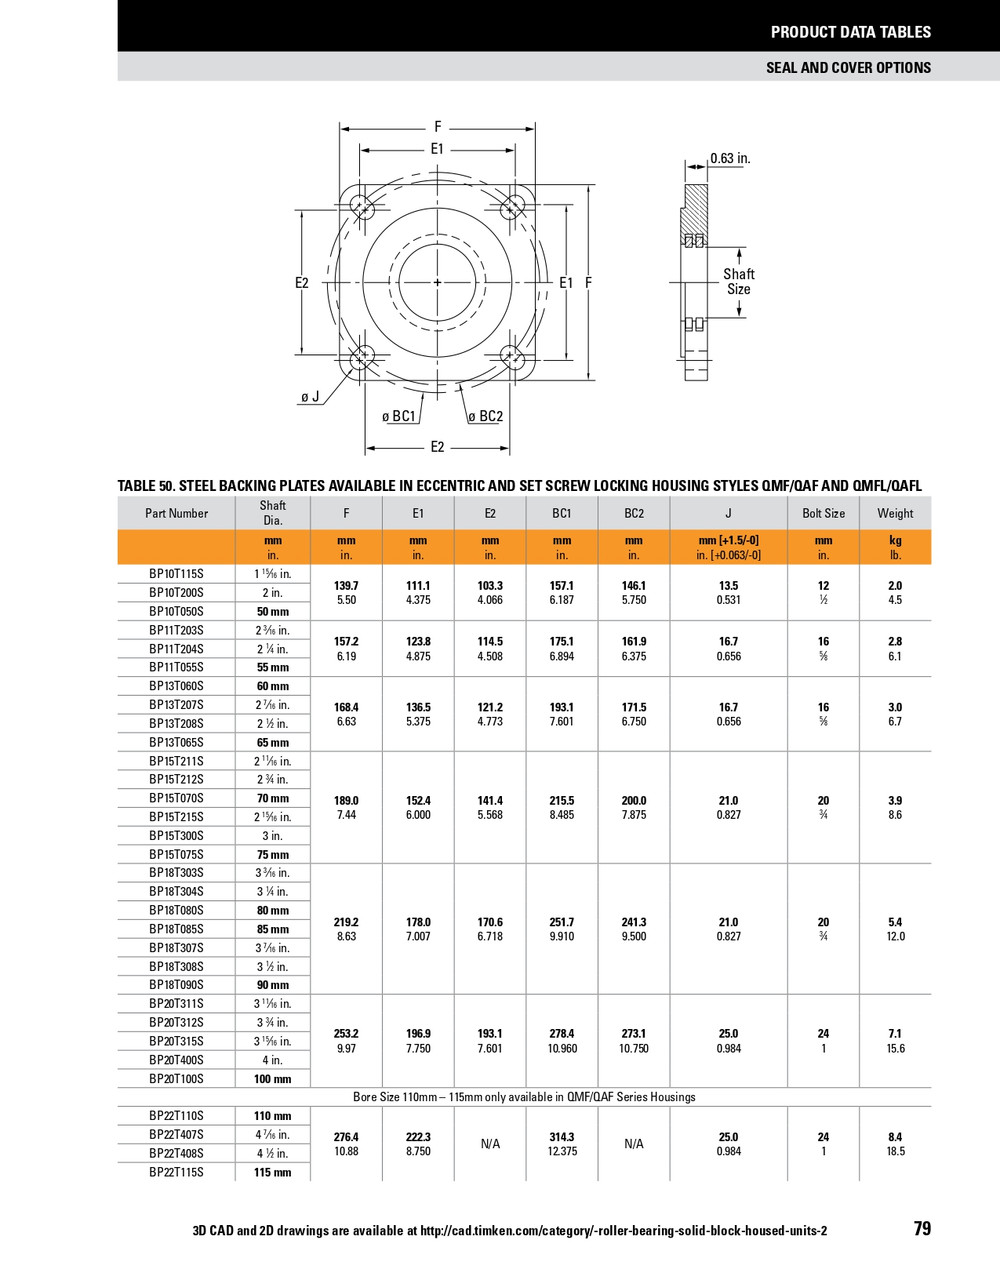 90mm Timken SRB Square Flange Backing Plate w/Dual Teflon Seals  BP18T090S